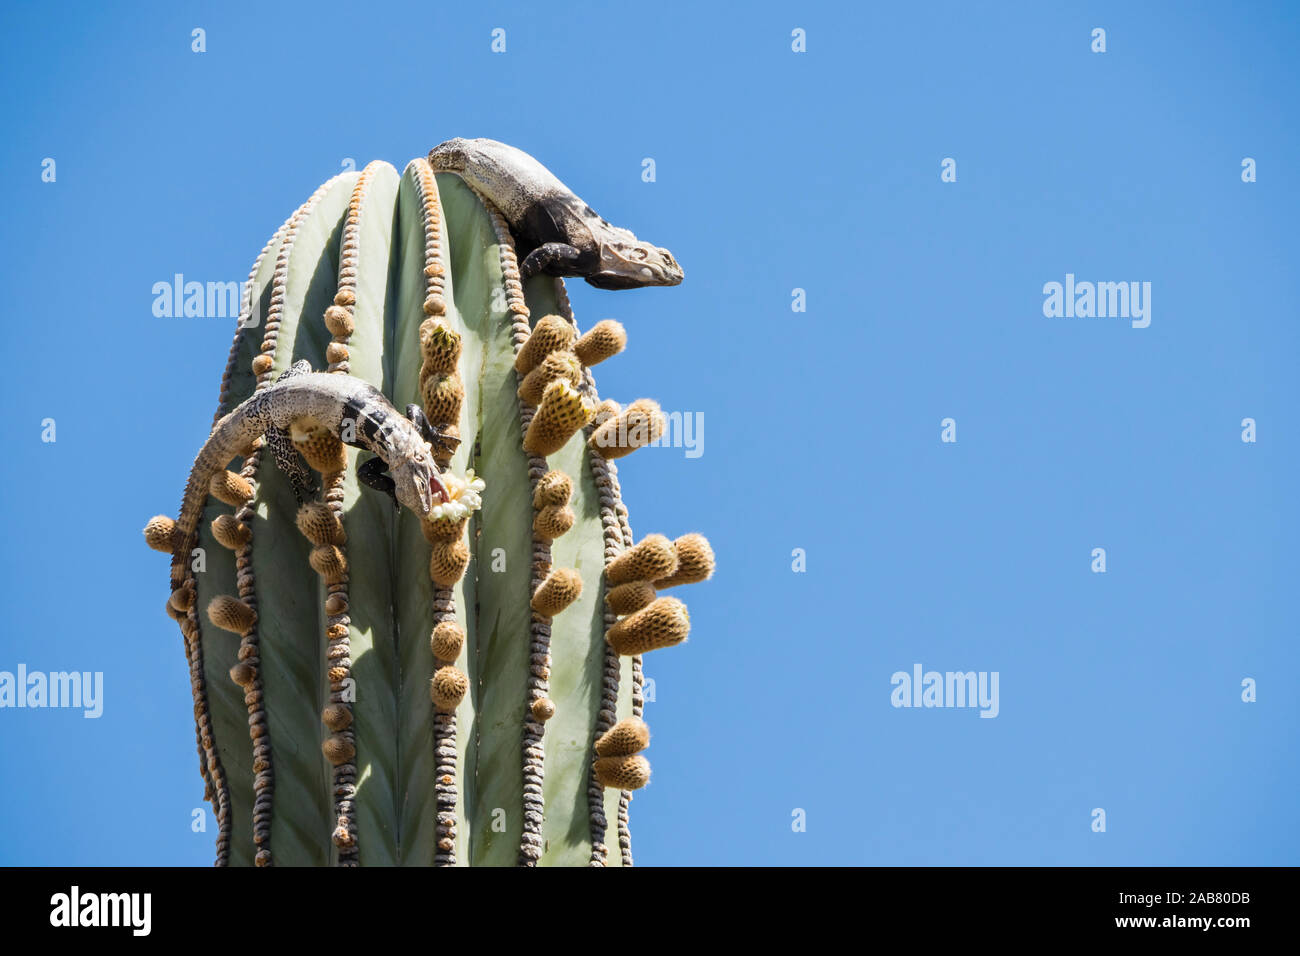 San Esteban spinoso-tailed iguana (Ctenosaura conspicuosa), mangiare cactus, Isla San Esteban, Baja California, Messico, America del Nord Foto Stock